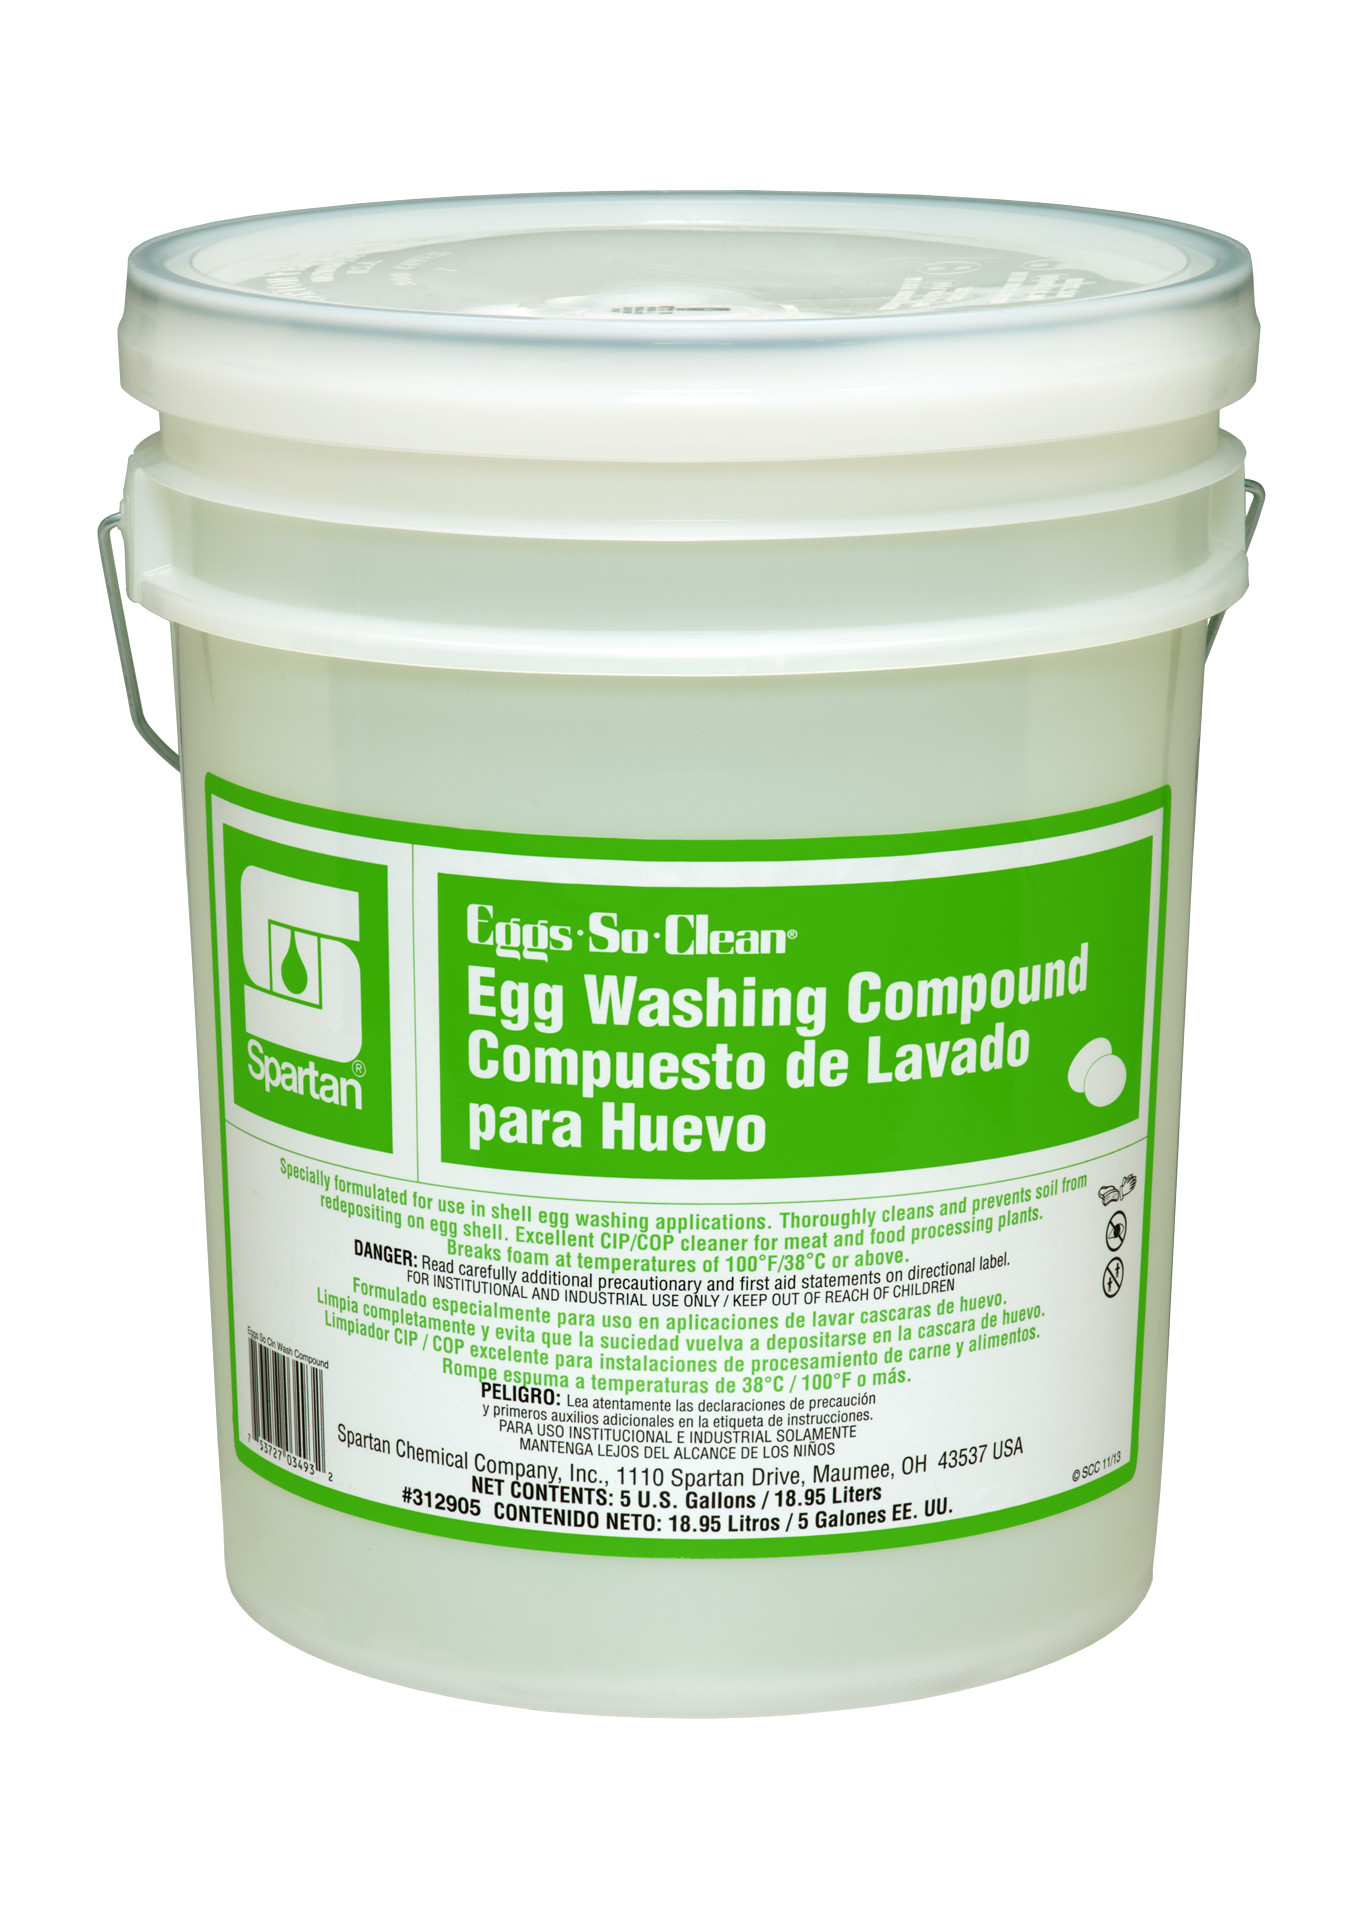 Spartan Chemical Company Eggs-So-Clean Egg Washing Compound, 5 GAL PAIL